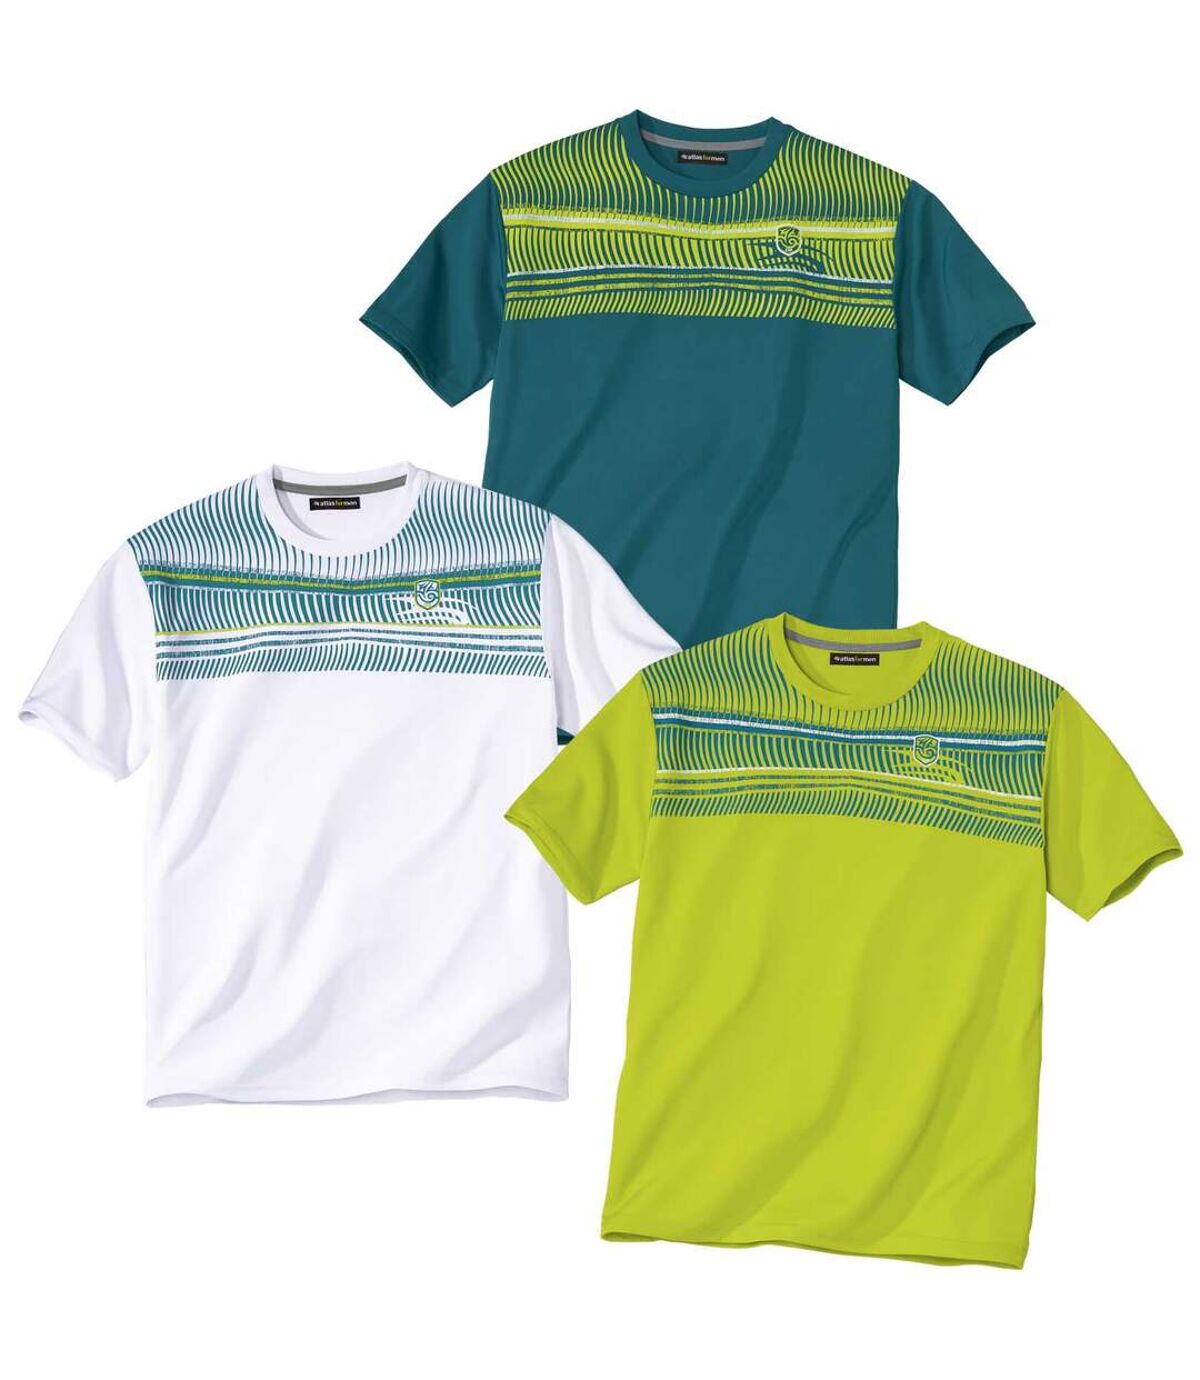 Sada 3 polyesterových triček Summer Sport Atlas For Men